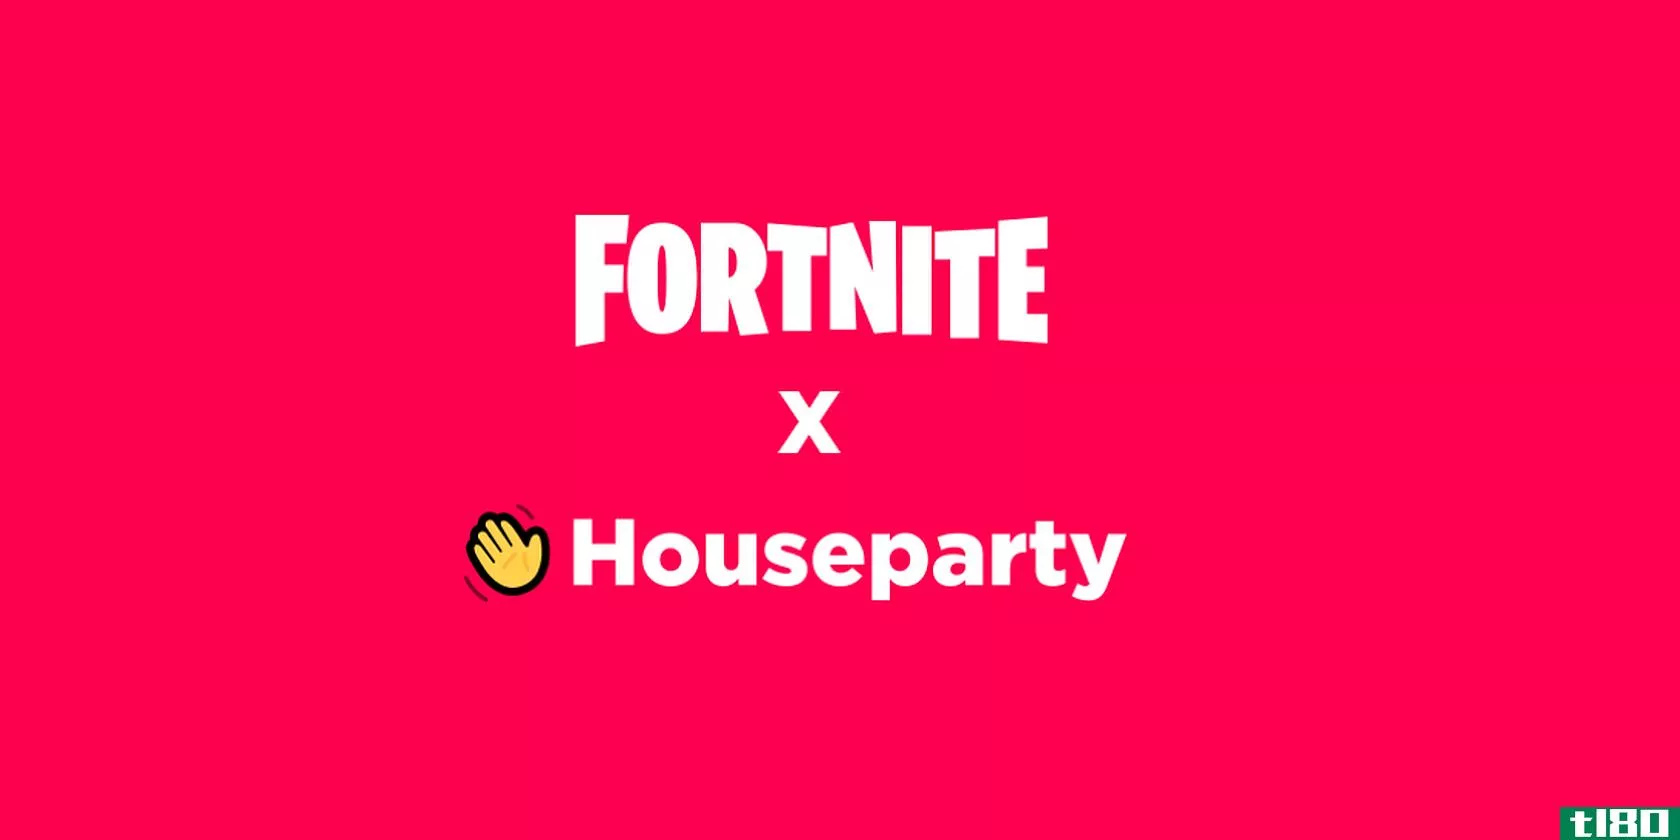 fortnite and houseparty logos